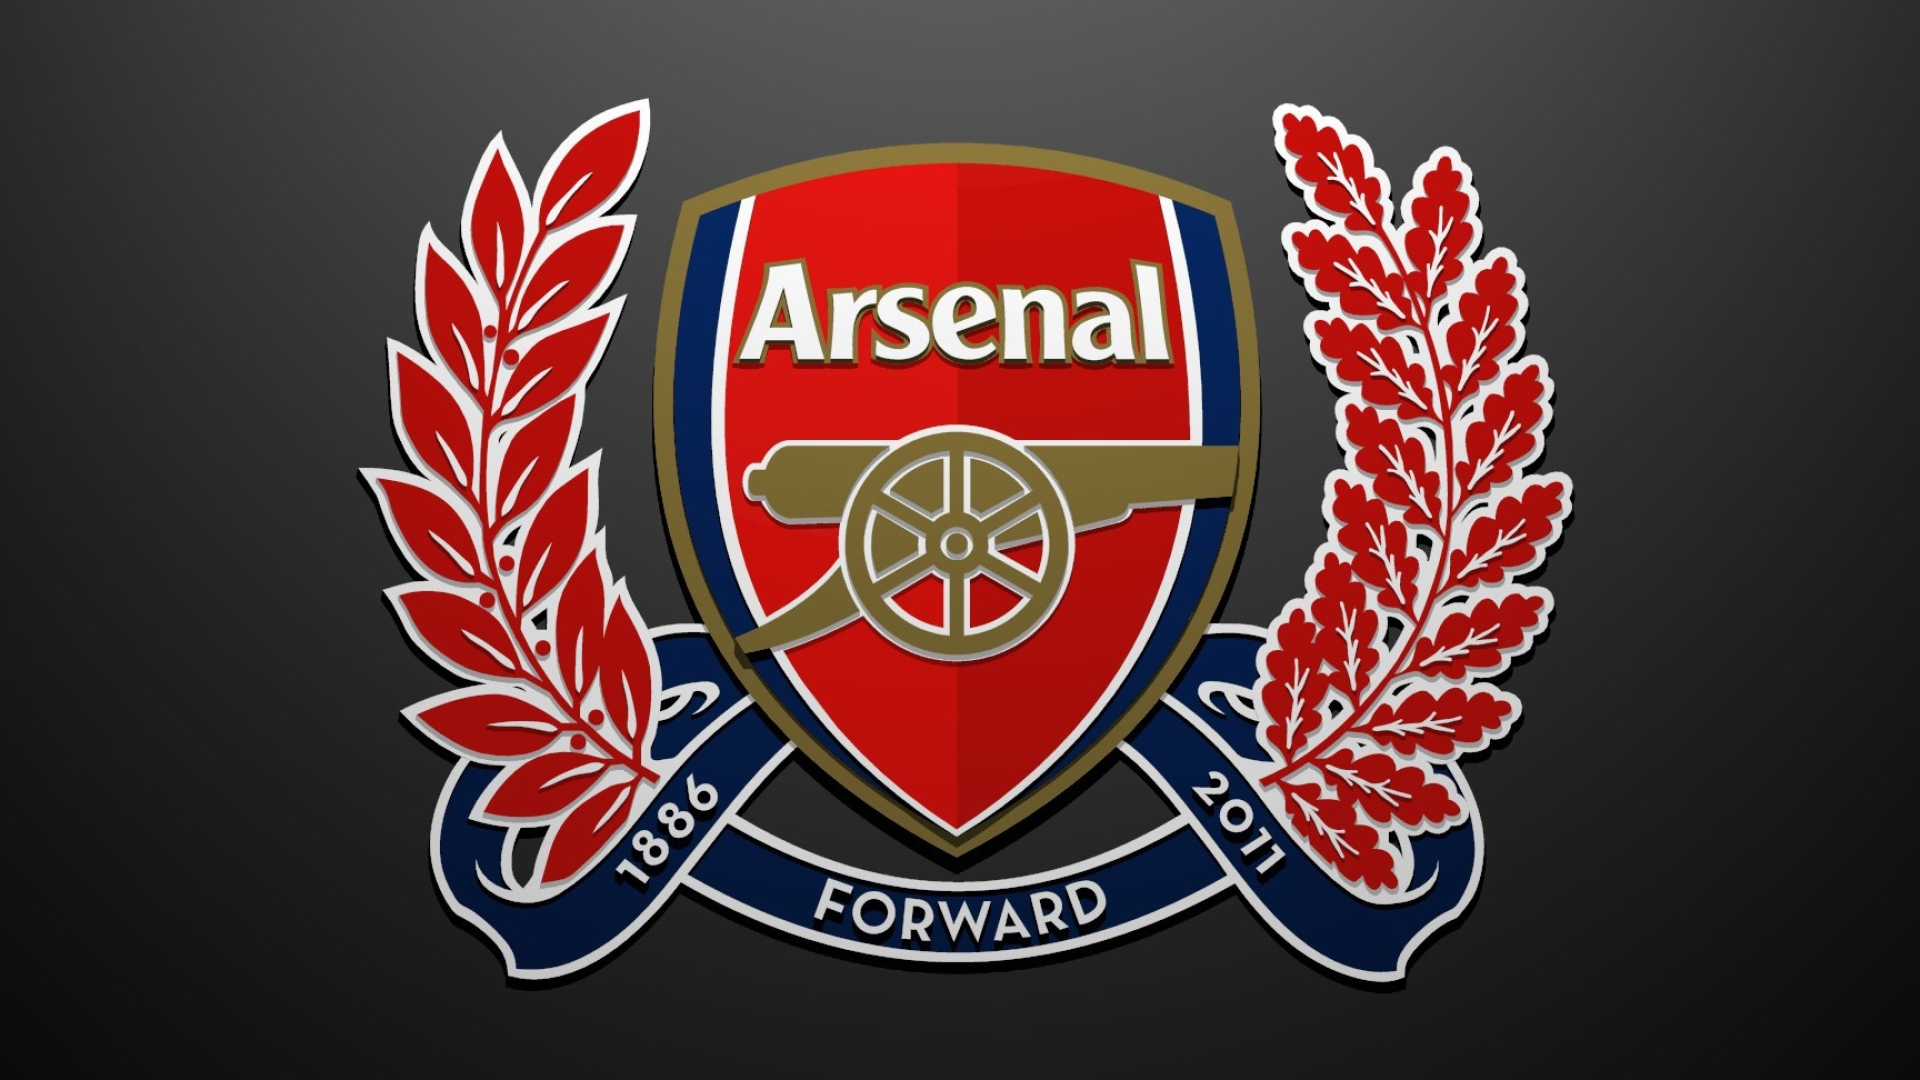 Arsenal FC, Sports wallpapers, High-quality, 4K resolution, 1920x1080 Full HD Desktop